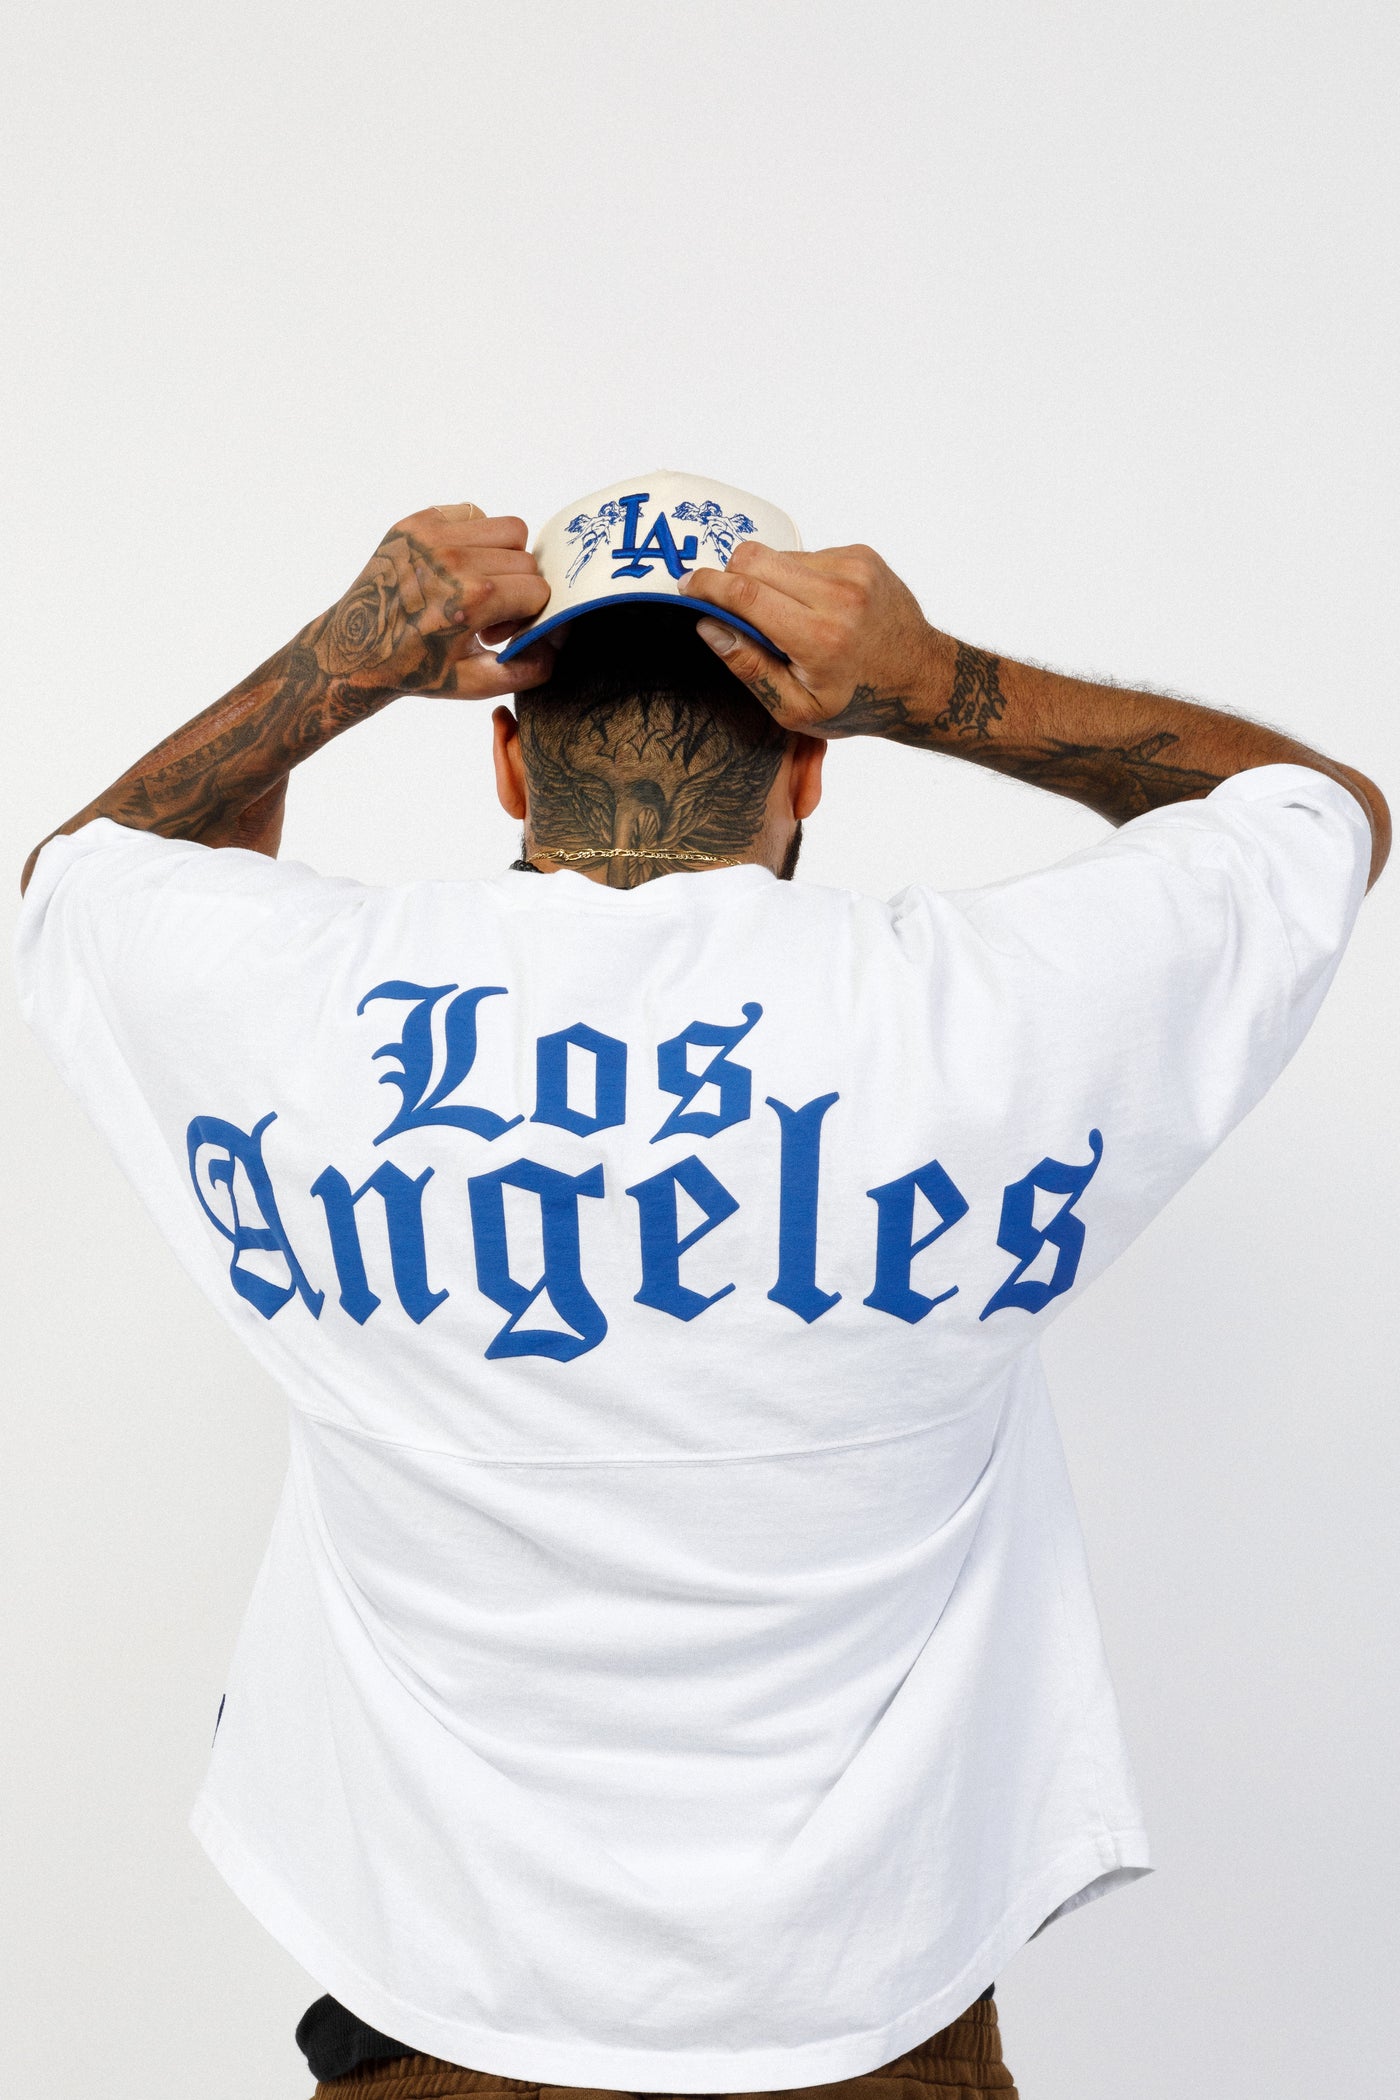 Los Angeles Jersey T-Shirt